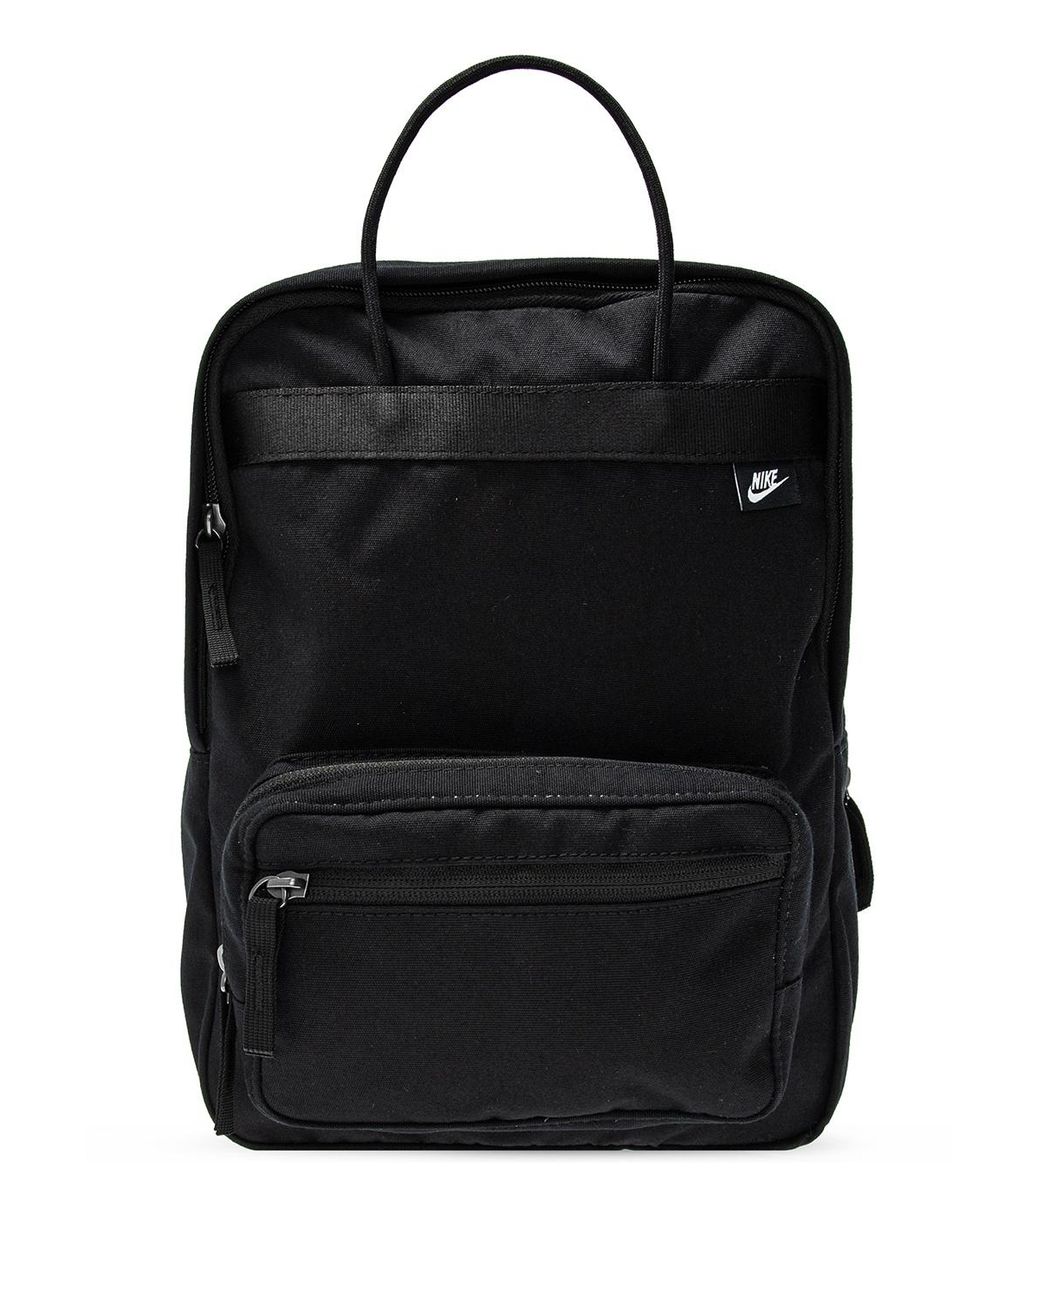 Nike Tanjun Premium Canvas Backpack in Black | Lyst Canada